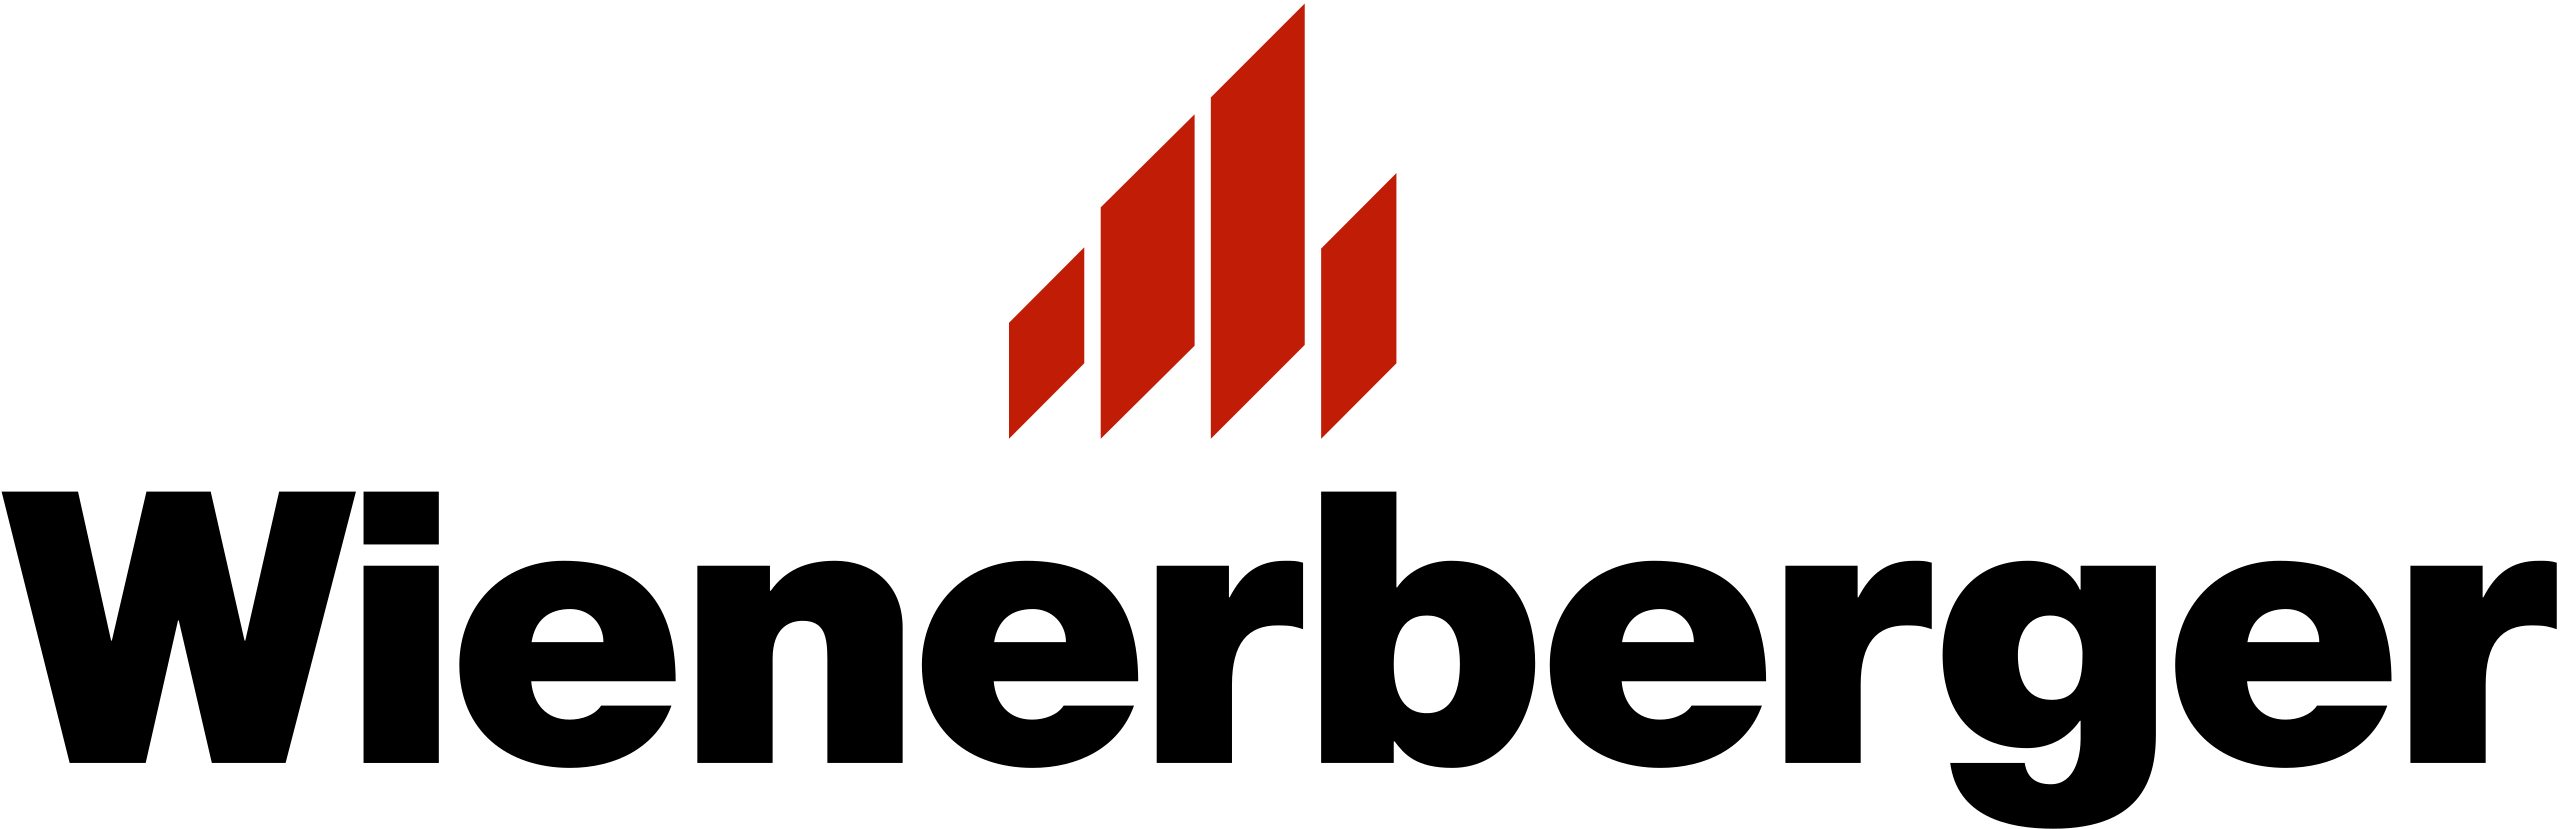 Logo Wienerberger - Cafca Software